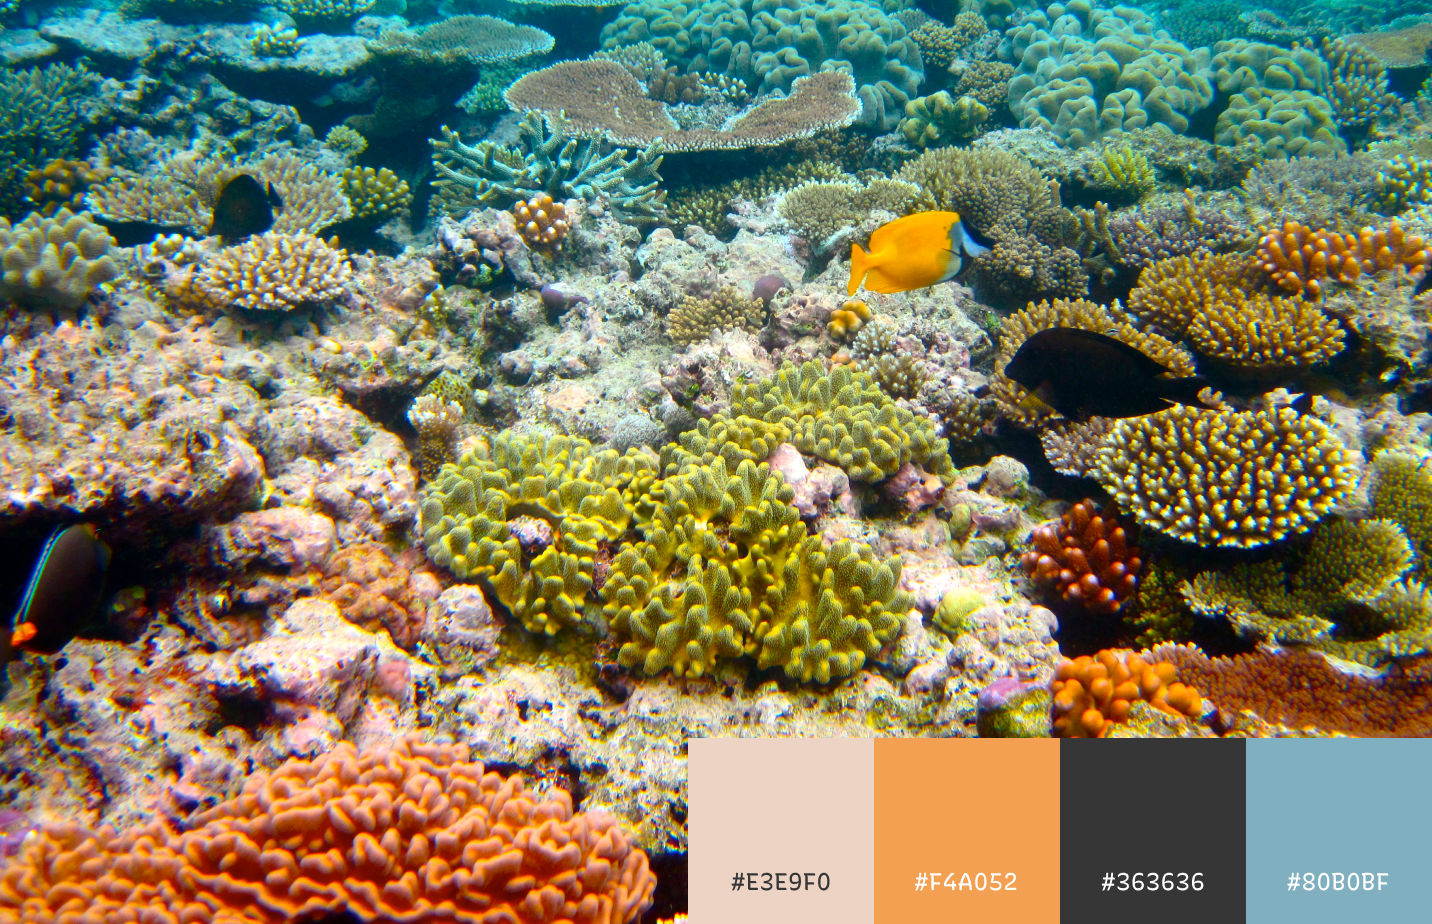 img: Greater Barrier Reef in Australia; source: [flickr](https://www.flickr.com/photos/kyletaylor/4875021166/in/photostream/)